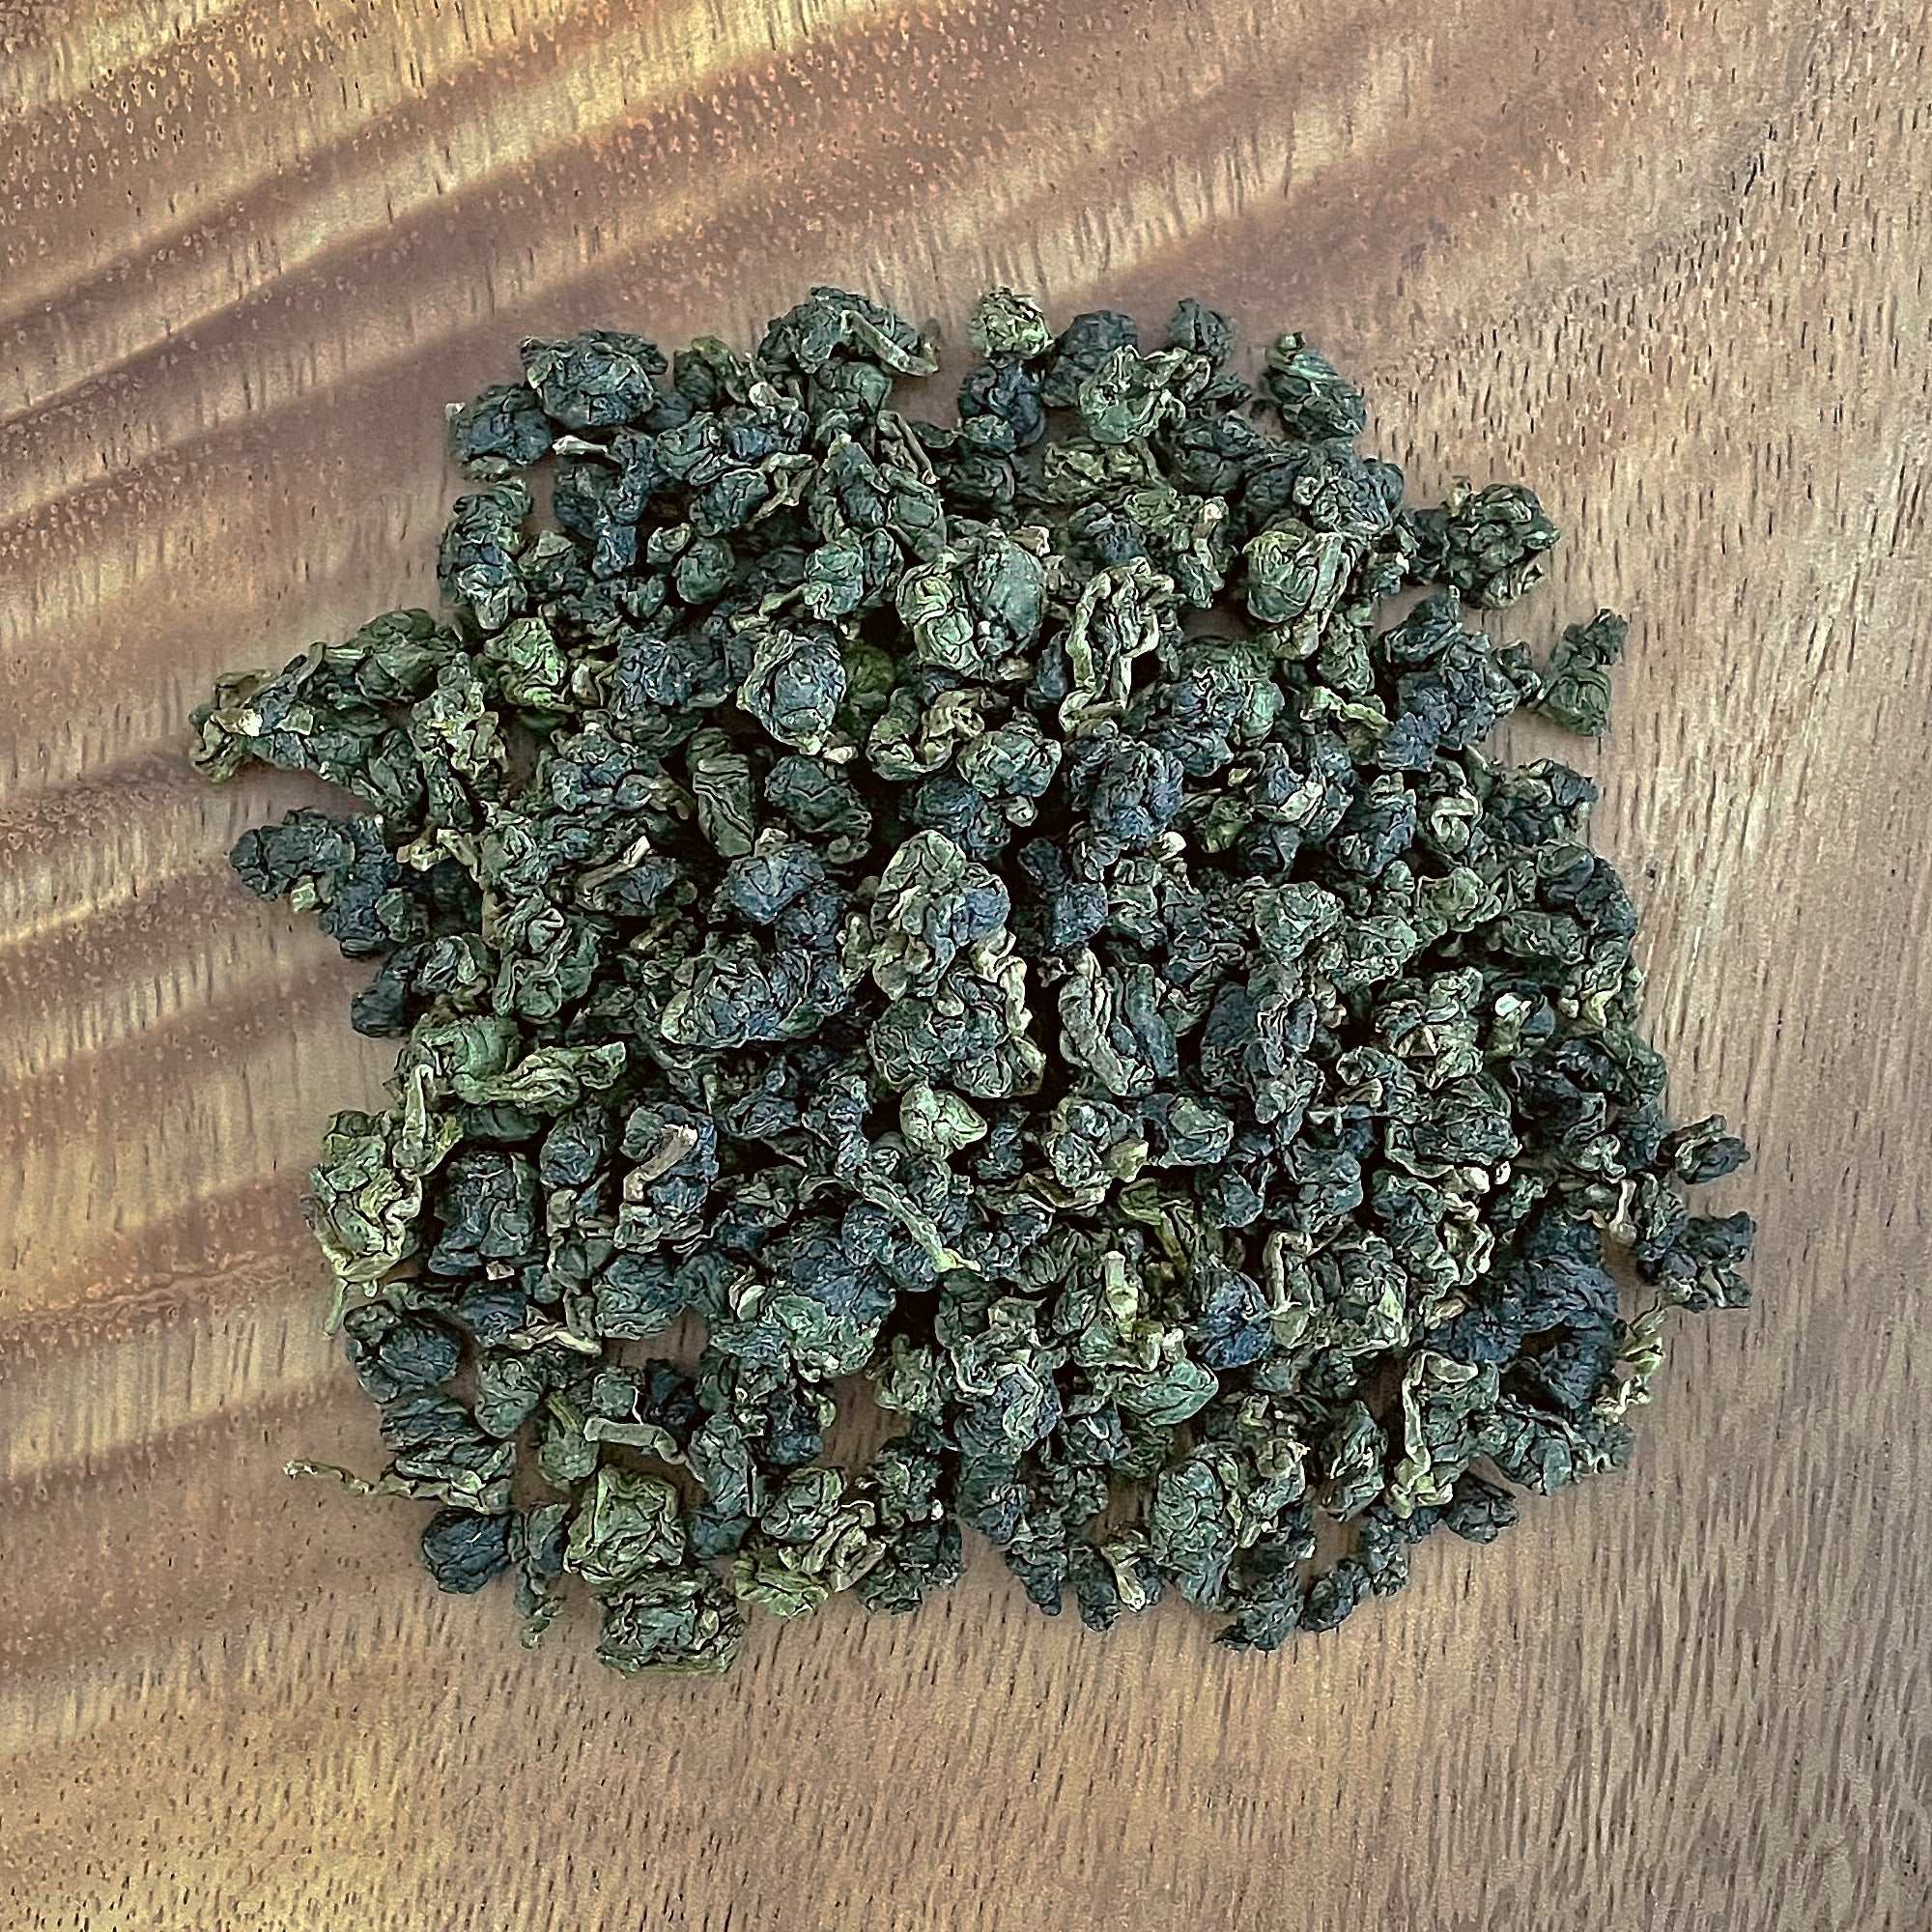 Premium Shanlinxi Small-Leaf Tieguanyin High Mountain Oolong Tea